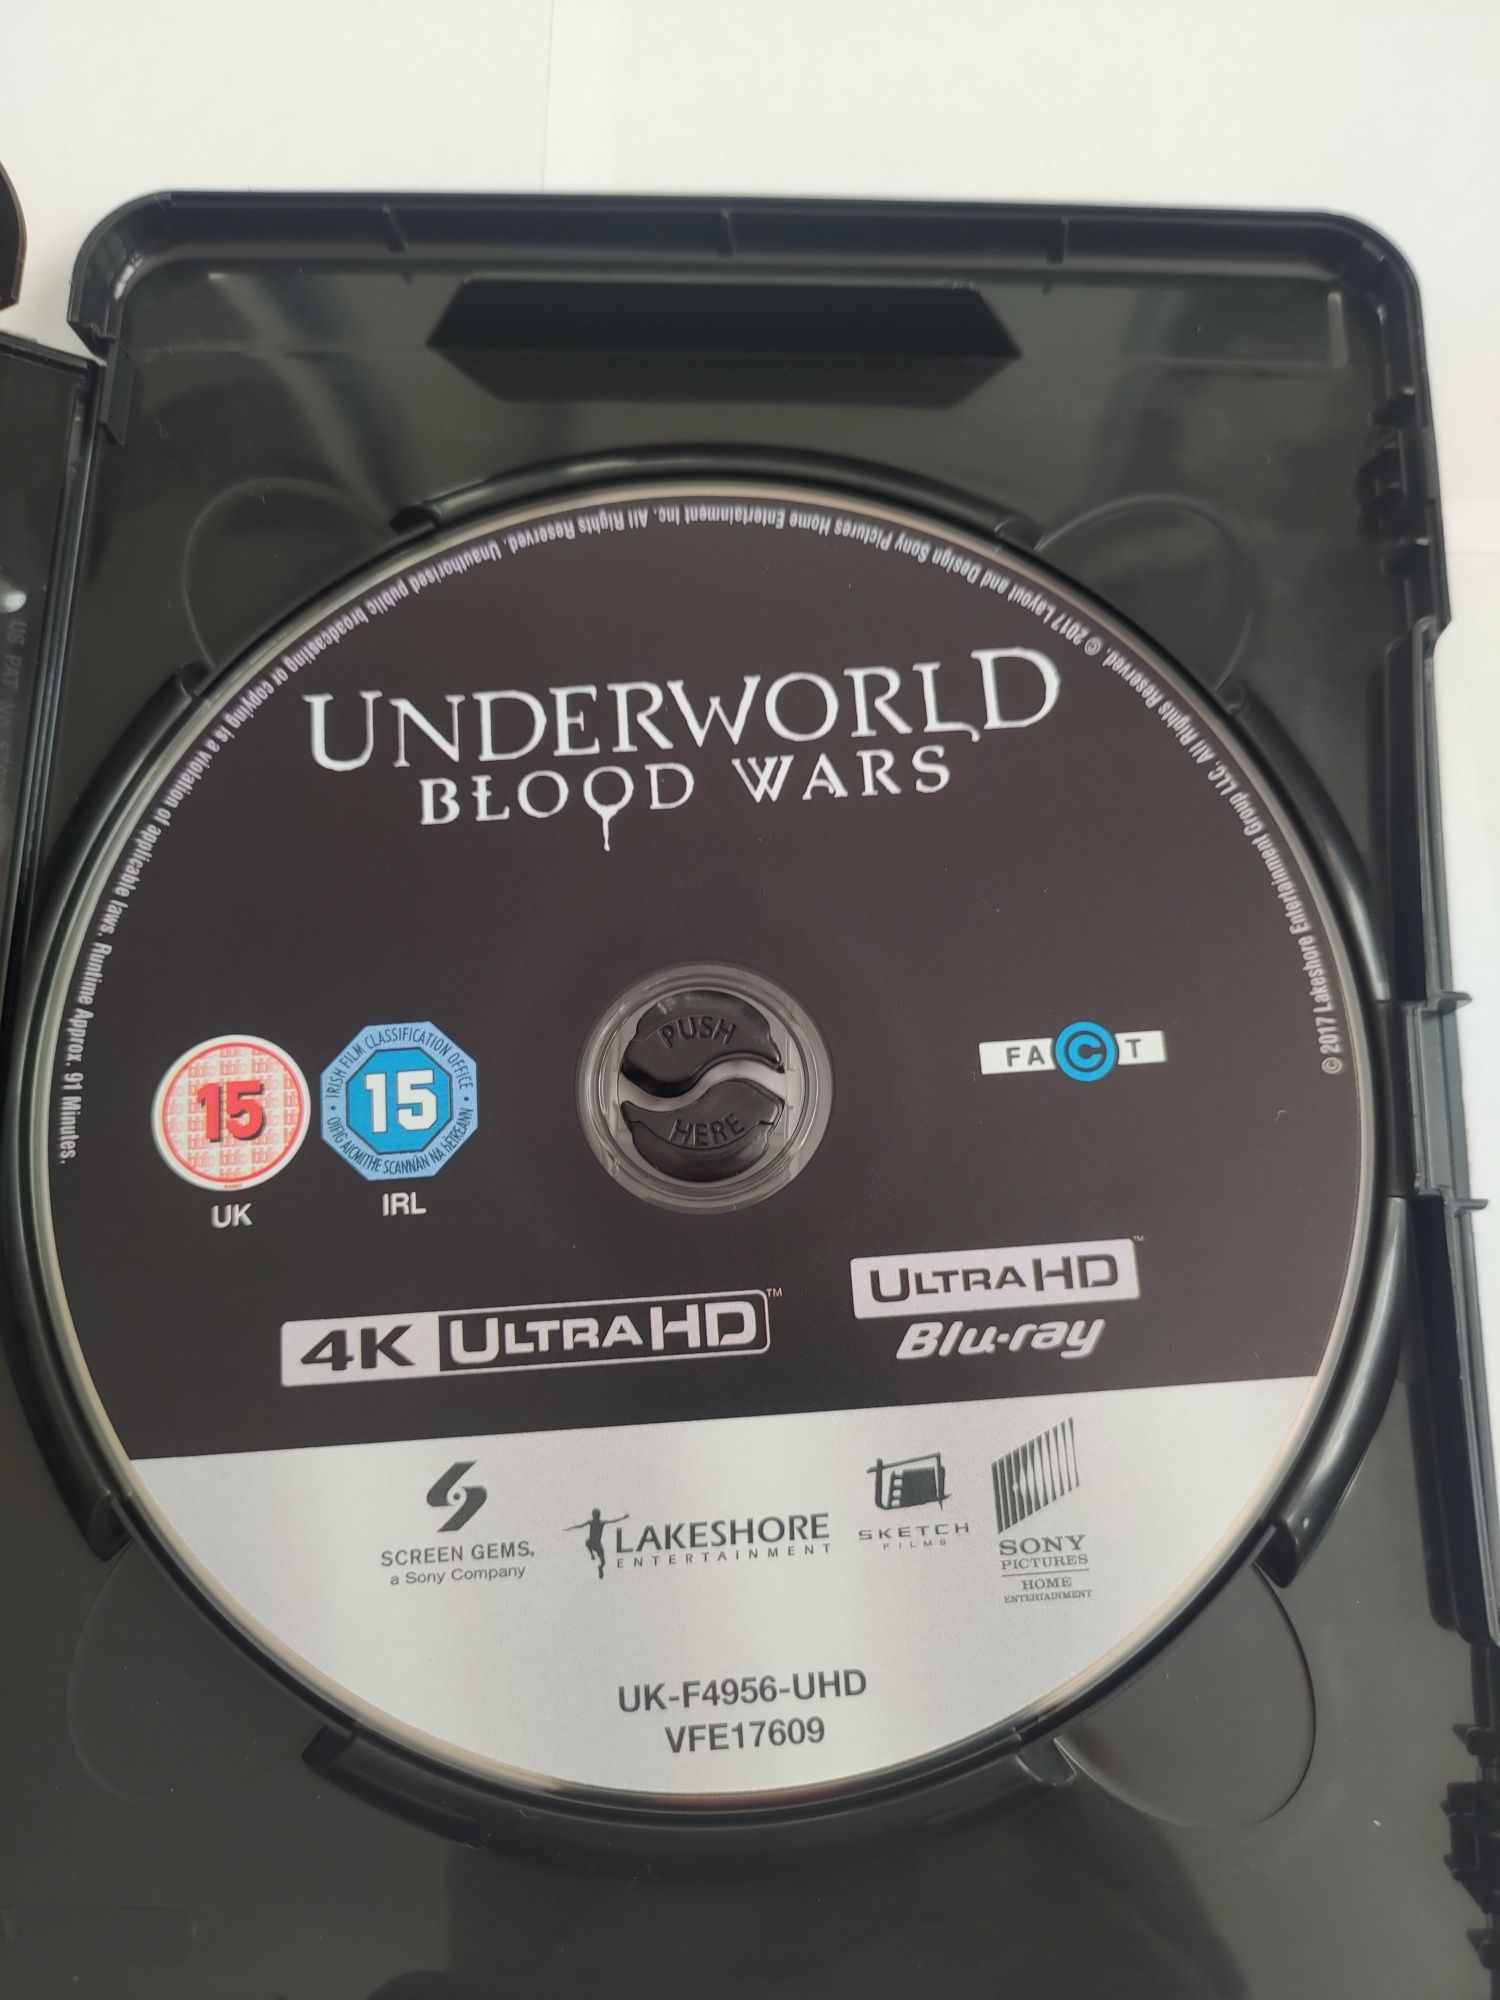 Underworld Blood Wars film 4k UHD blu ray